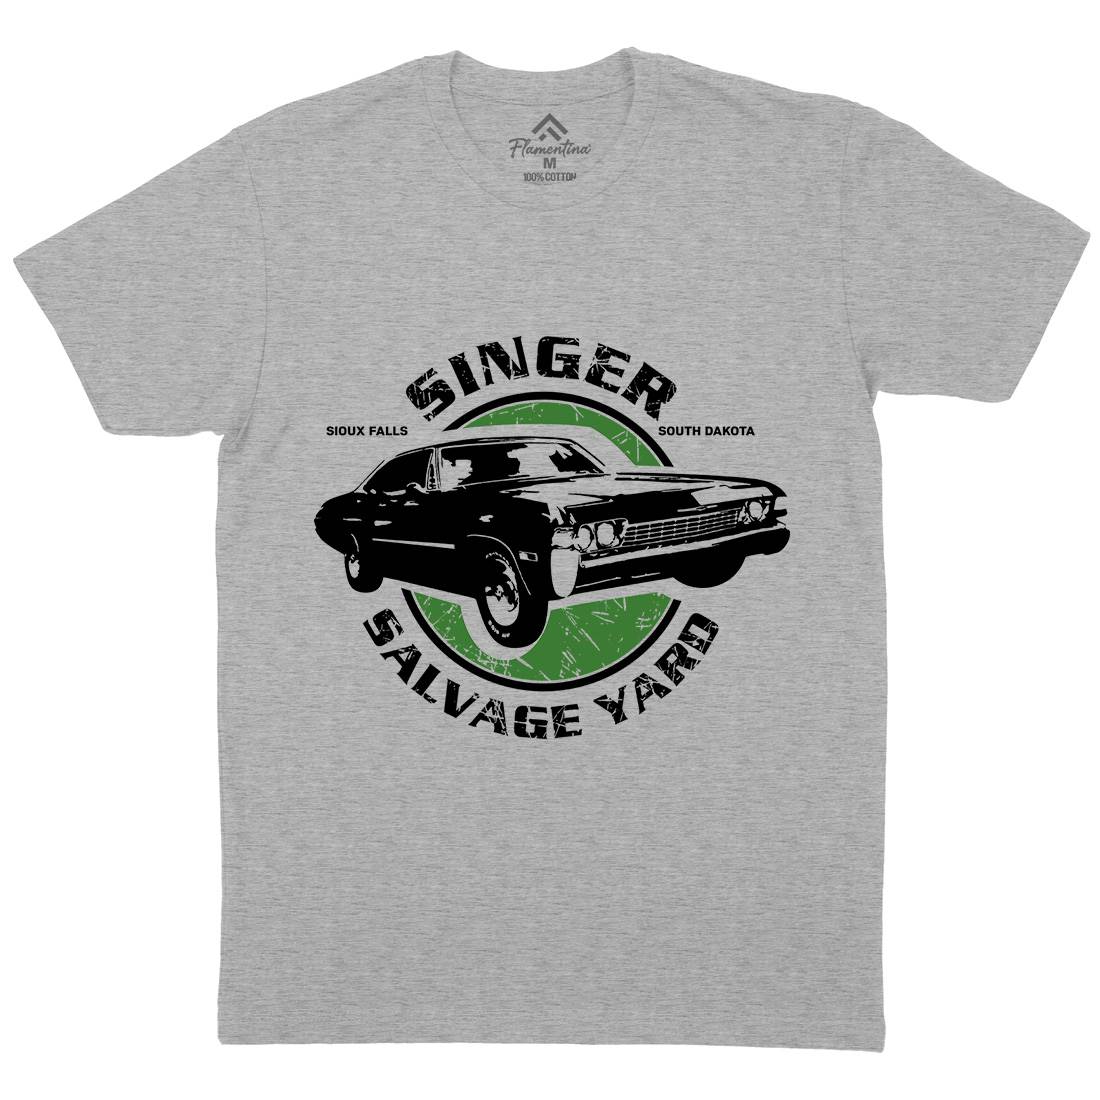 Singer Salvage Yard Mens Crew Neck T-Shirt Cars D377